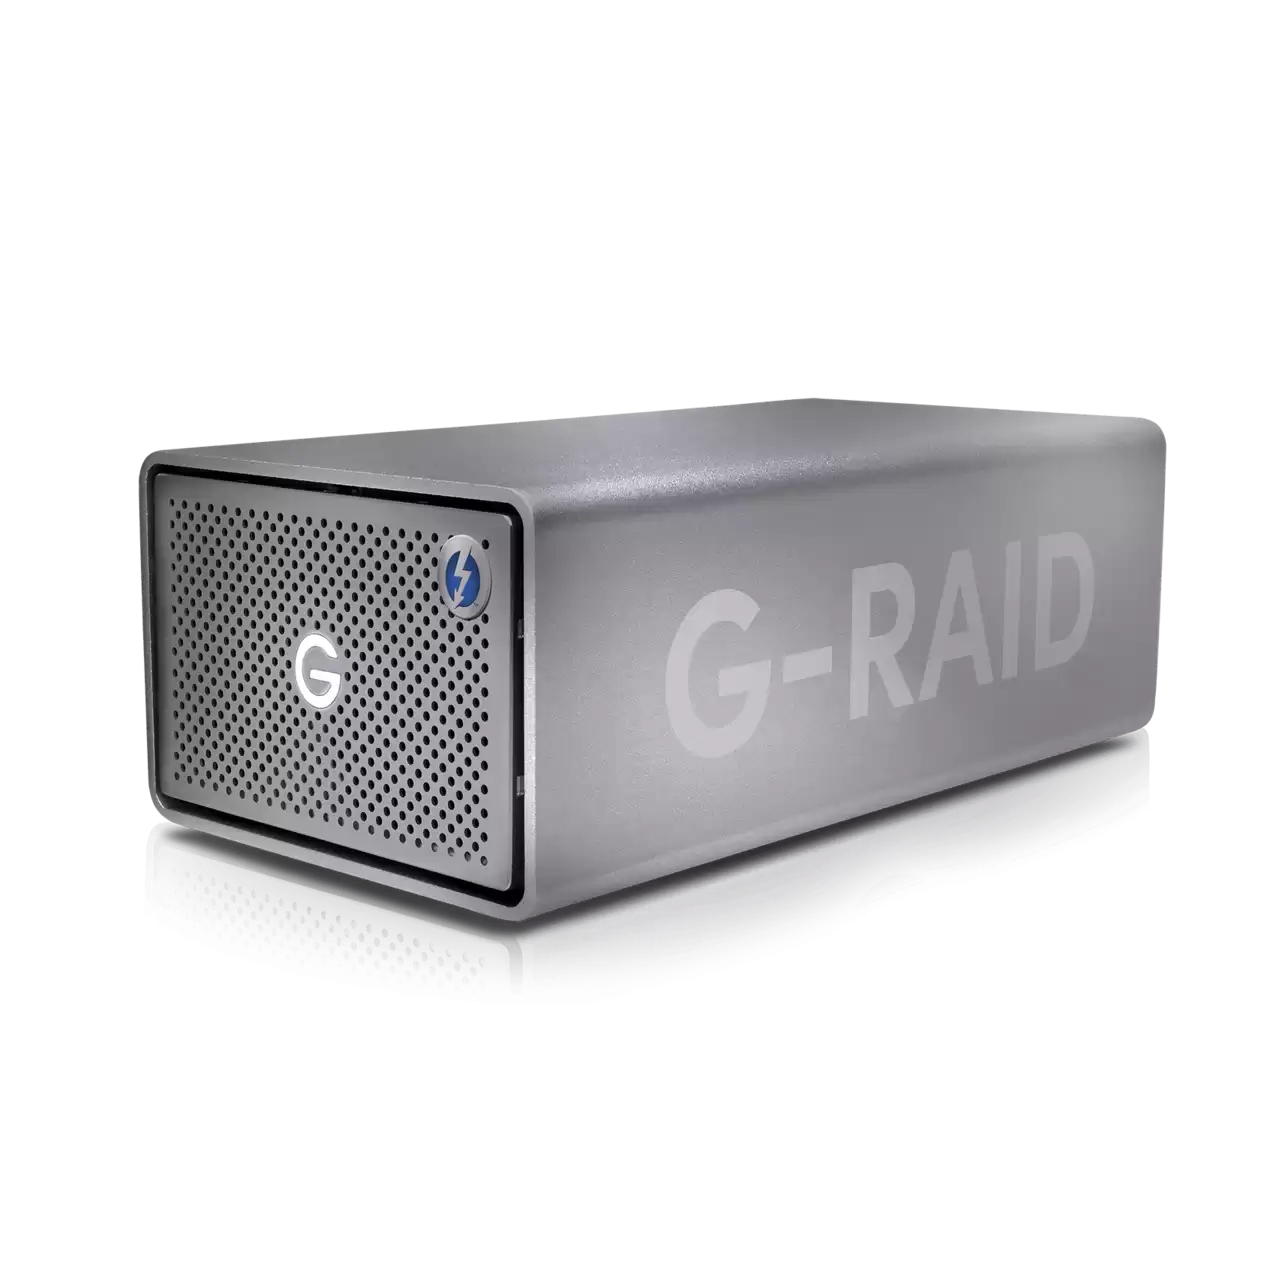 SanDisk Professional G-RAID 2 外置桌上型硬碟 - 8TB